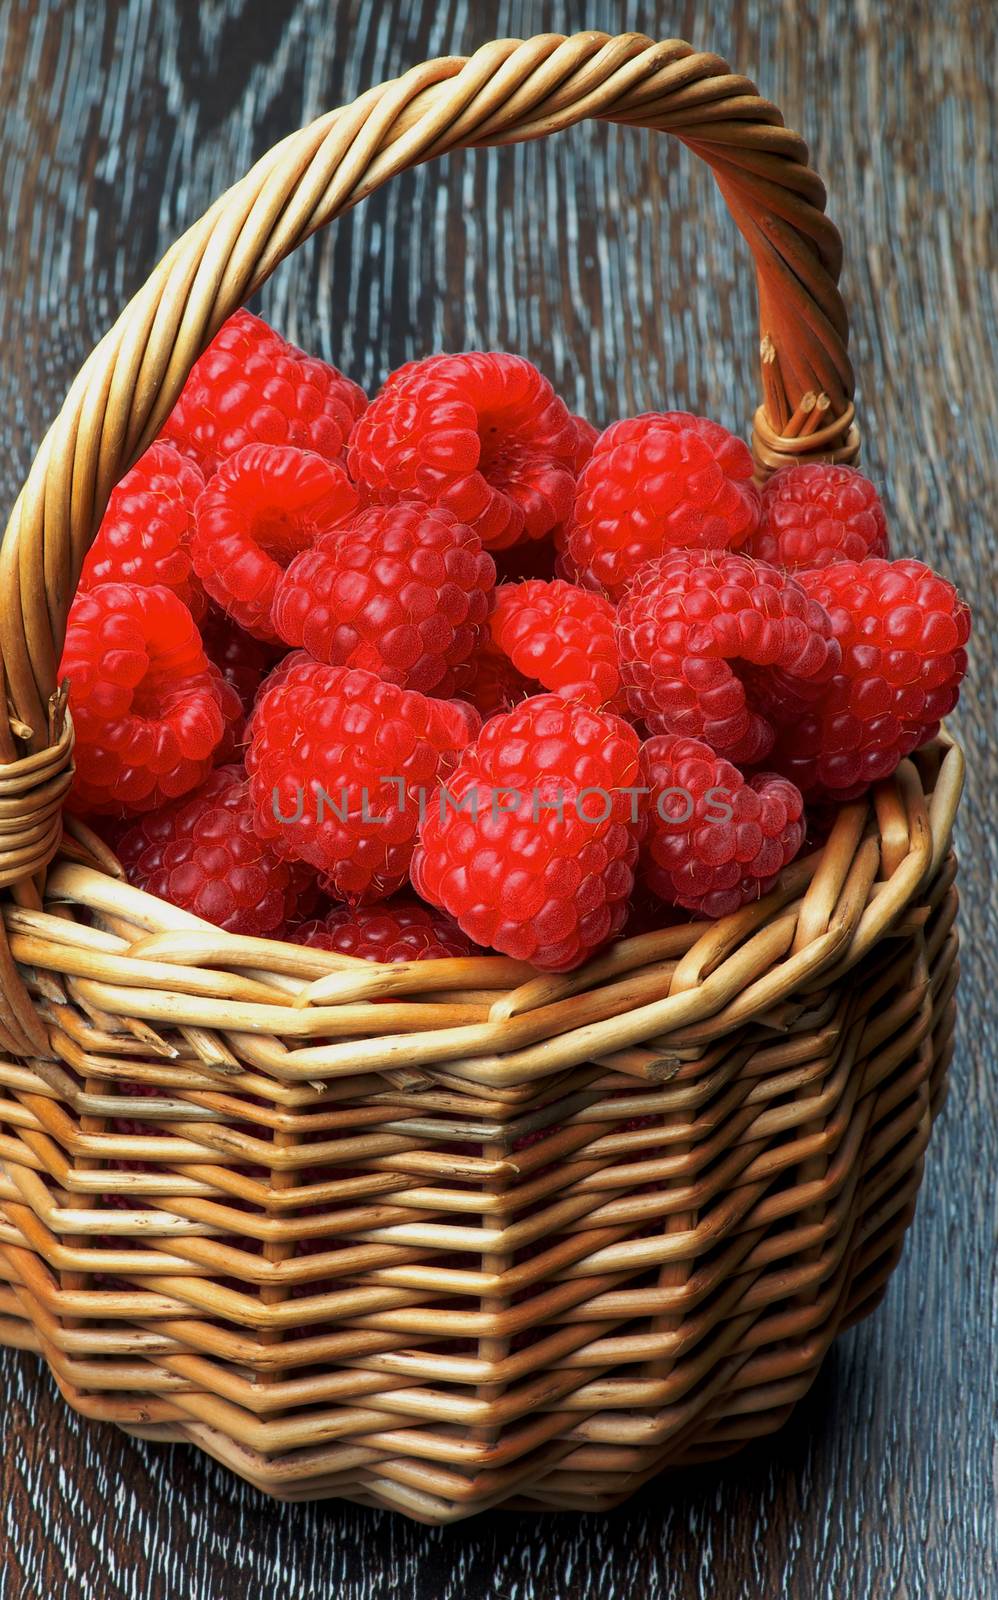 Basket with Raspberries by zhekos